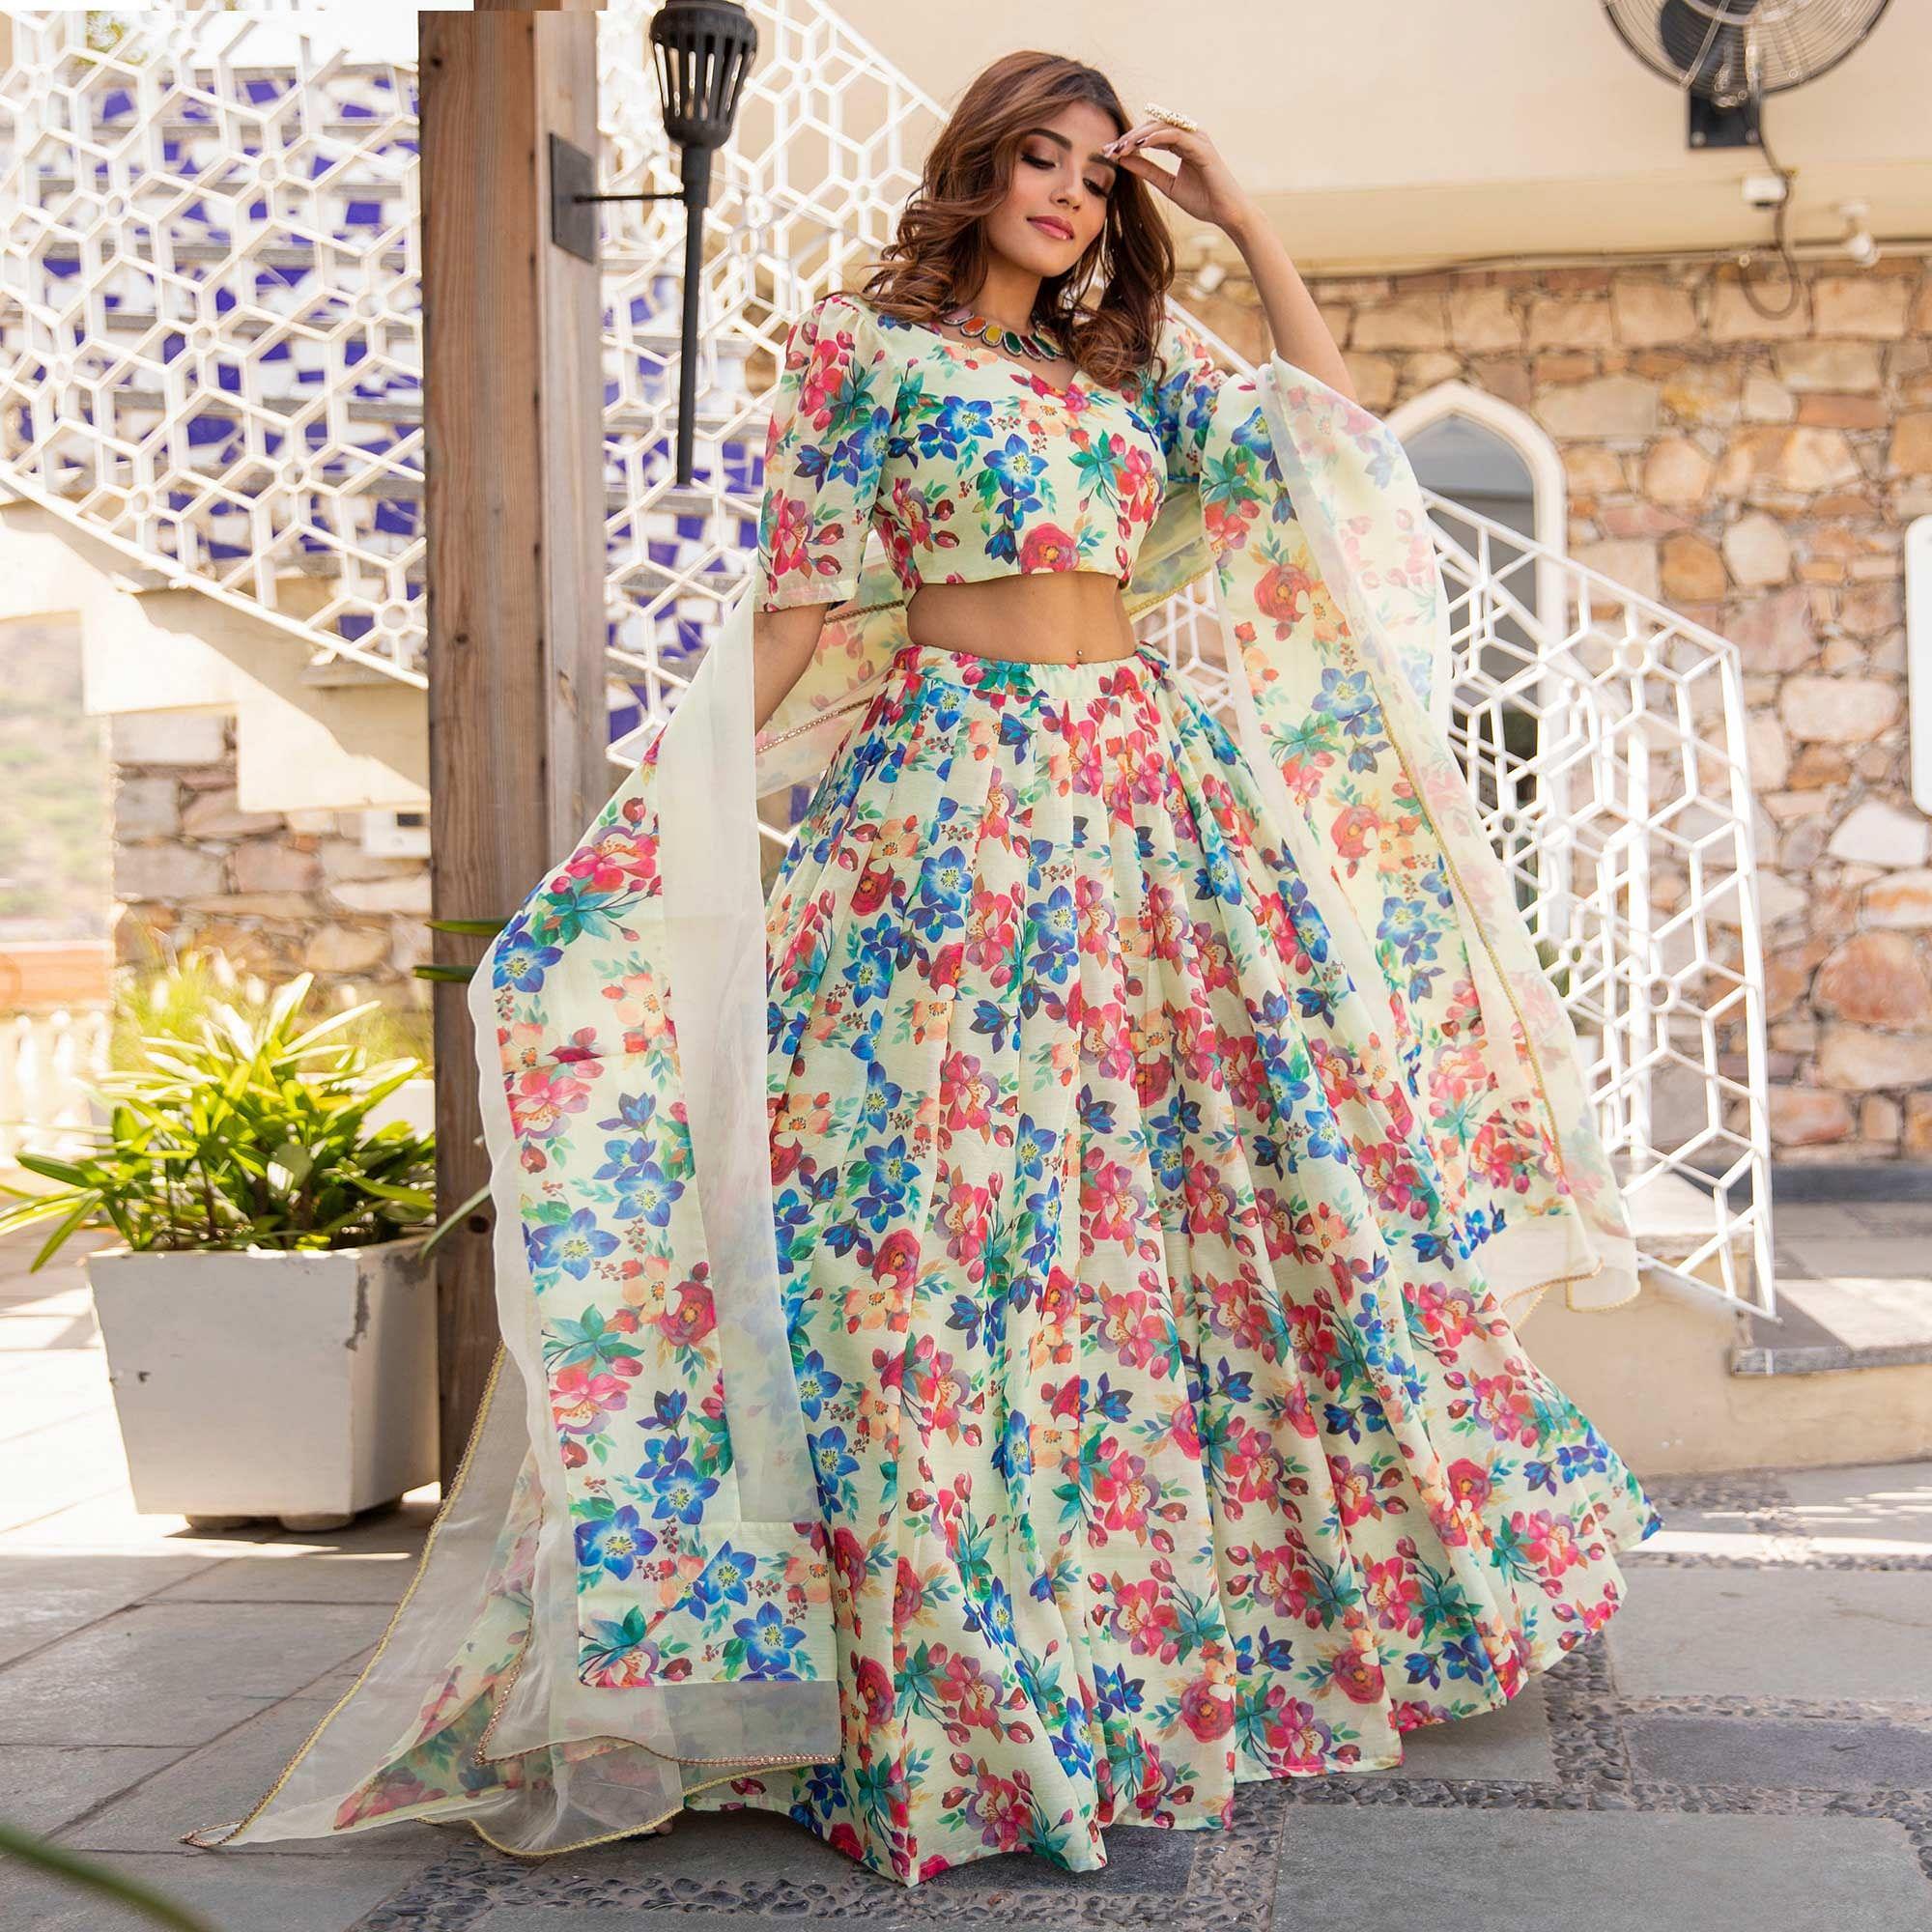 Multicolored Wedding Wear Designer Floral Prined Chanderi Designer